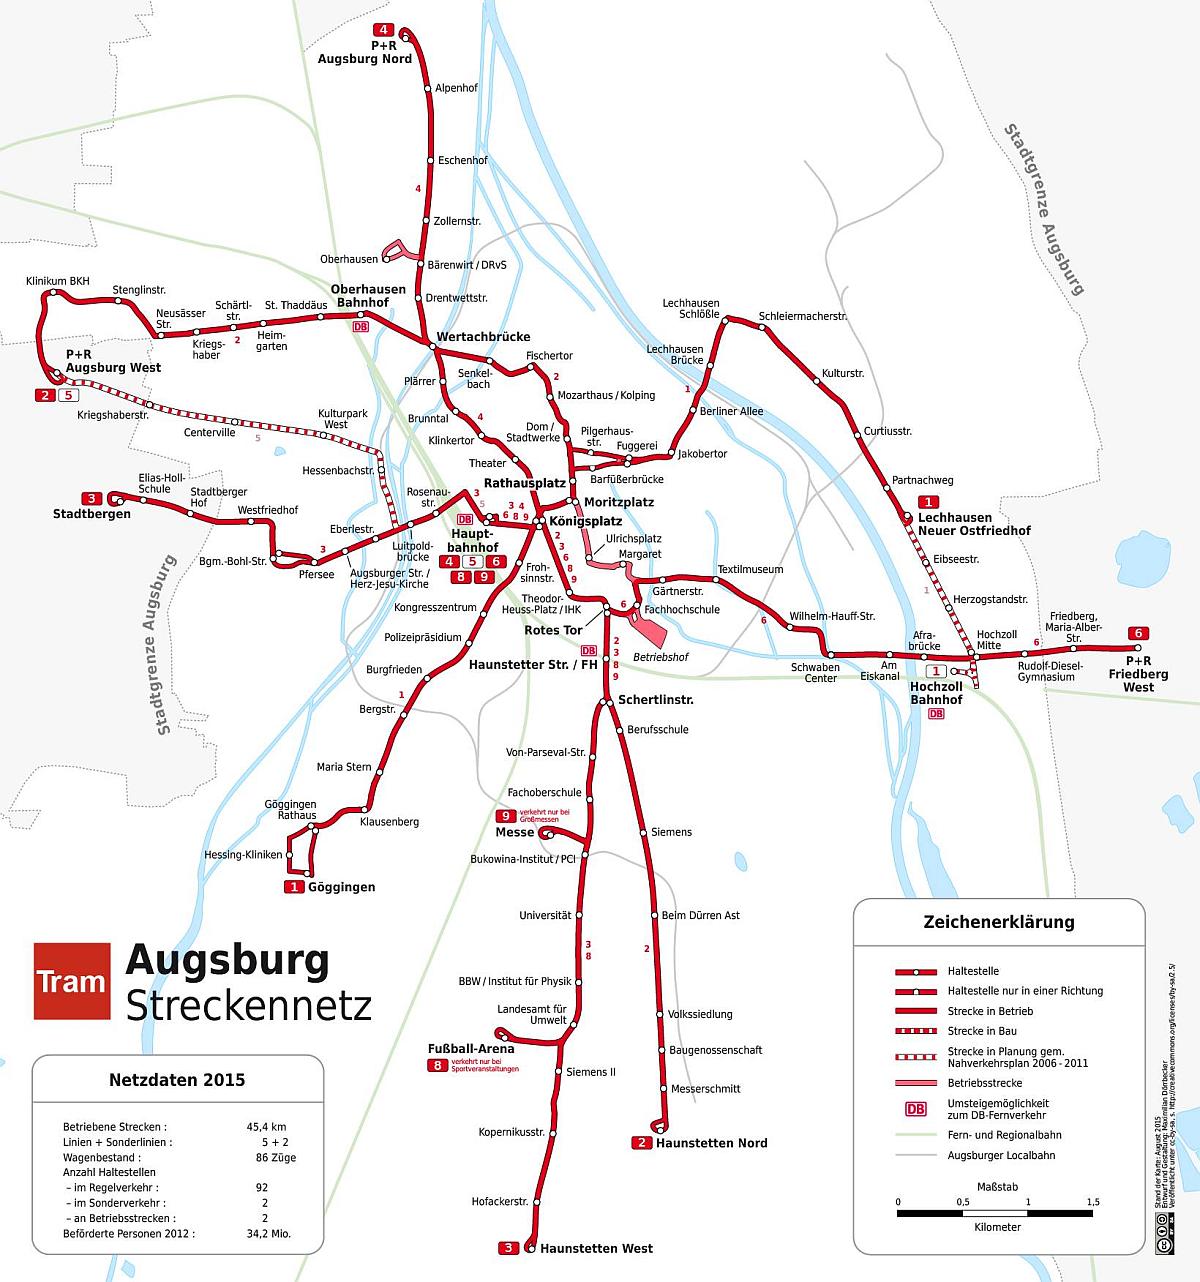 map of augsburg